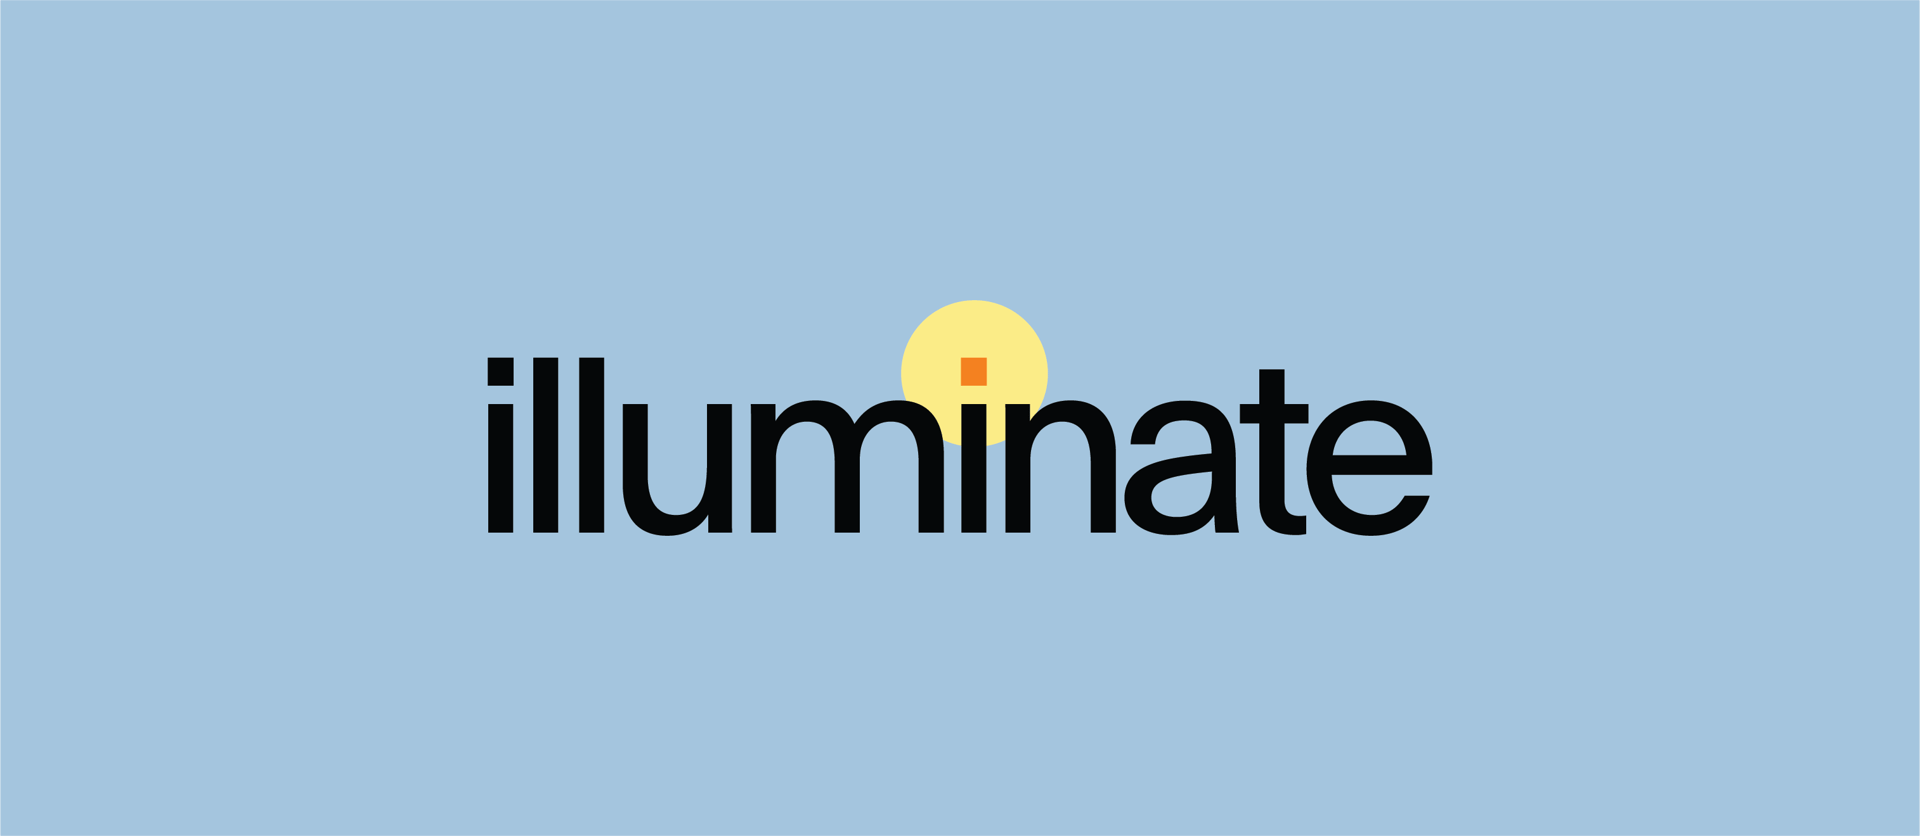 PagerDuty Illuminate logo